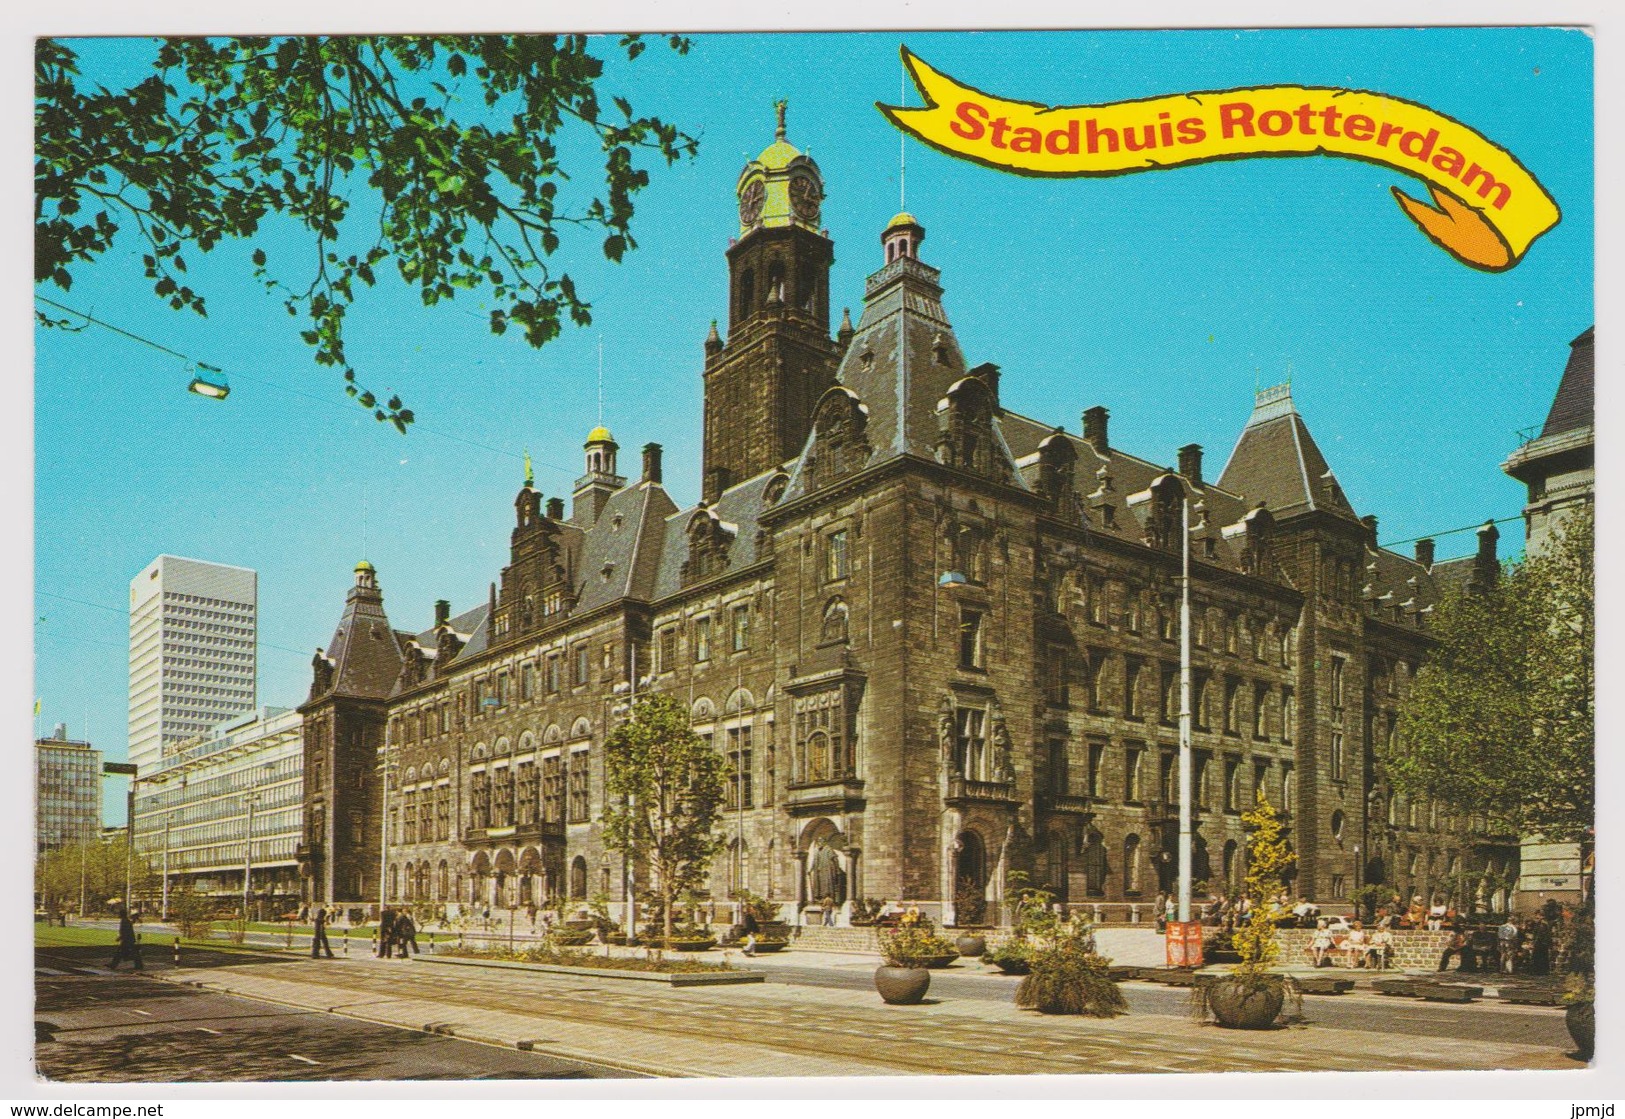 Rotterdam - Stadhuis - Towmhall - Ed. Euro Color Cards N° 915 - Kinderdijk